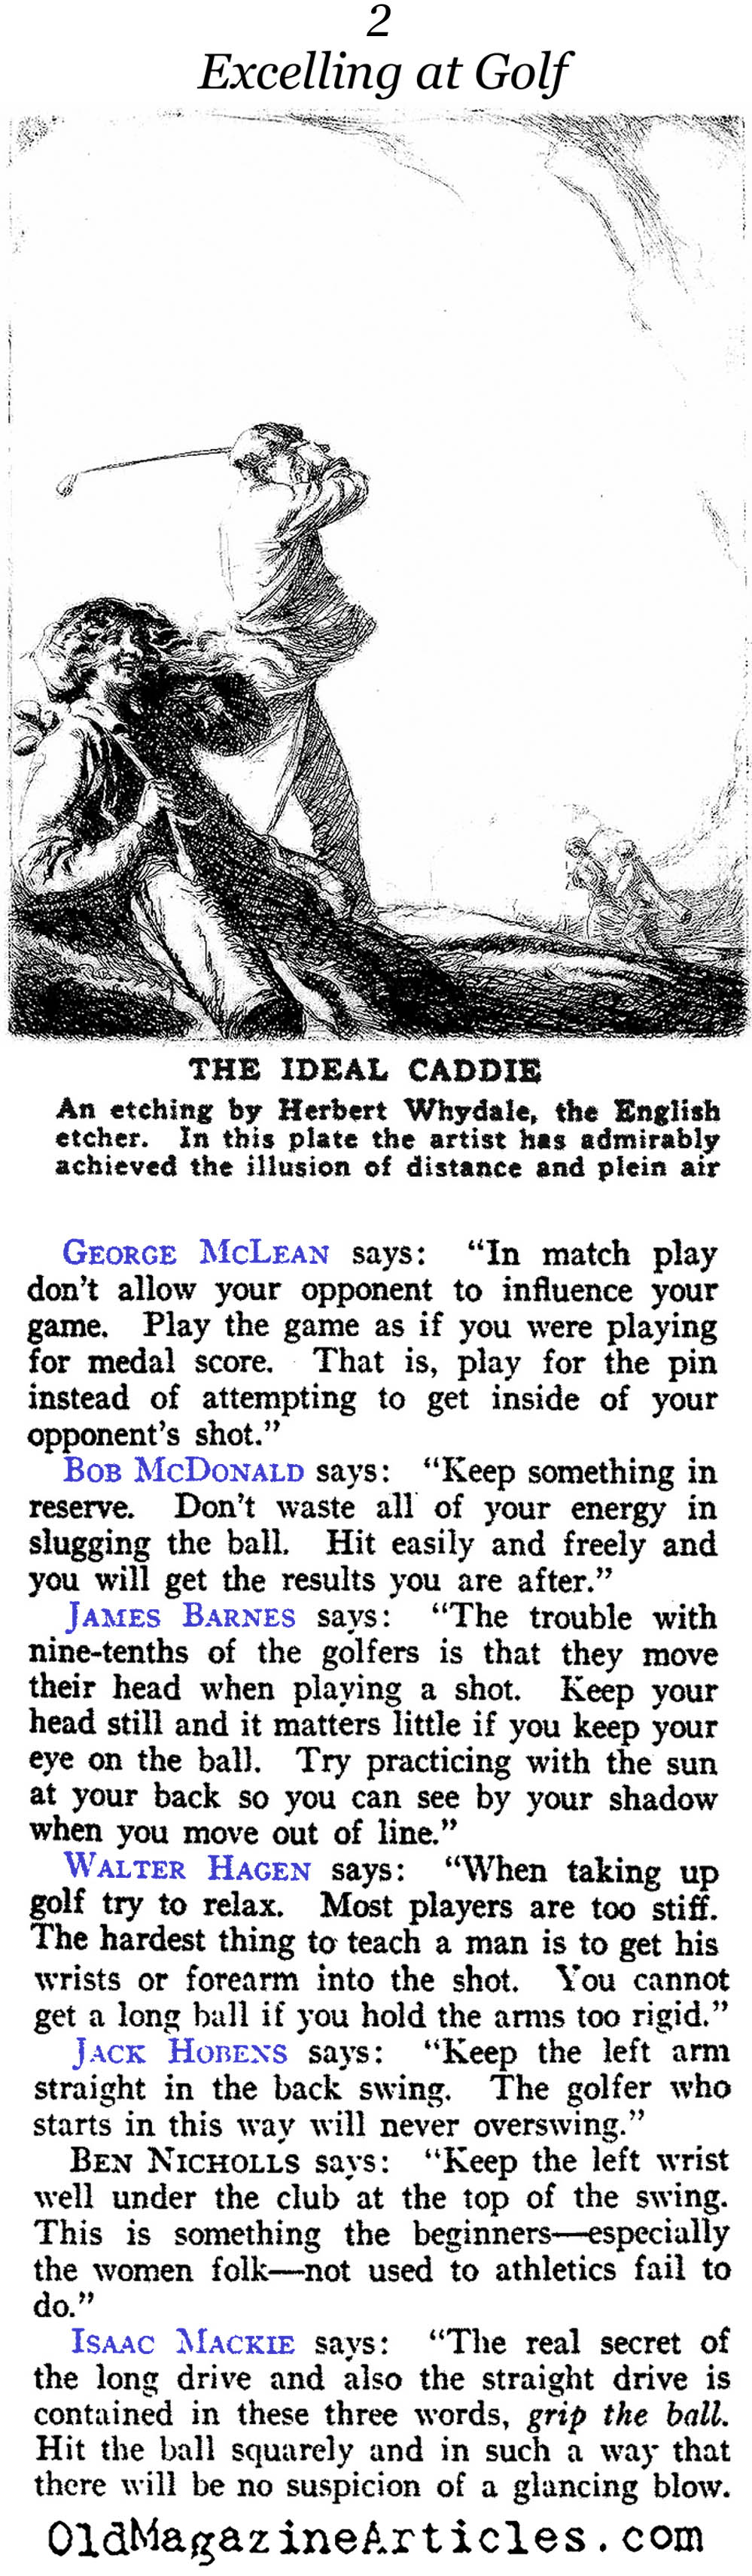 Essential Elements in Golf (Vanity Fair Magazine, 1918)